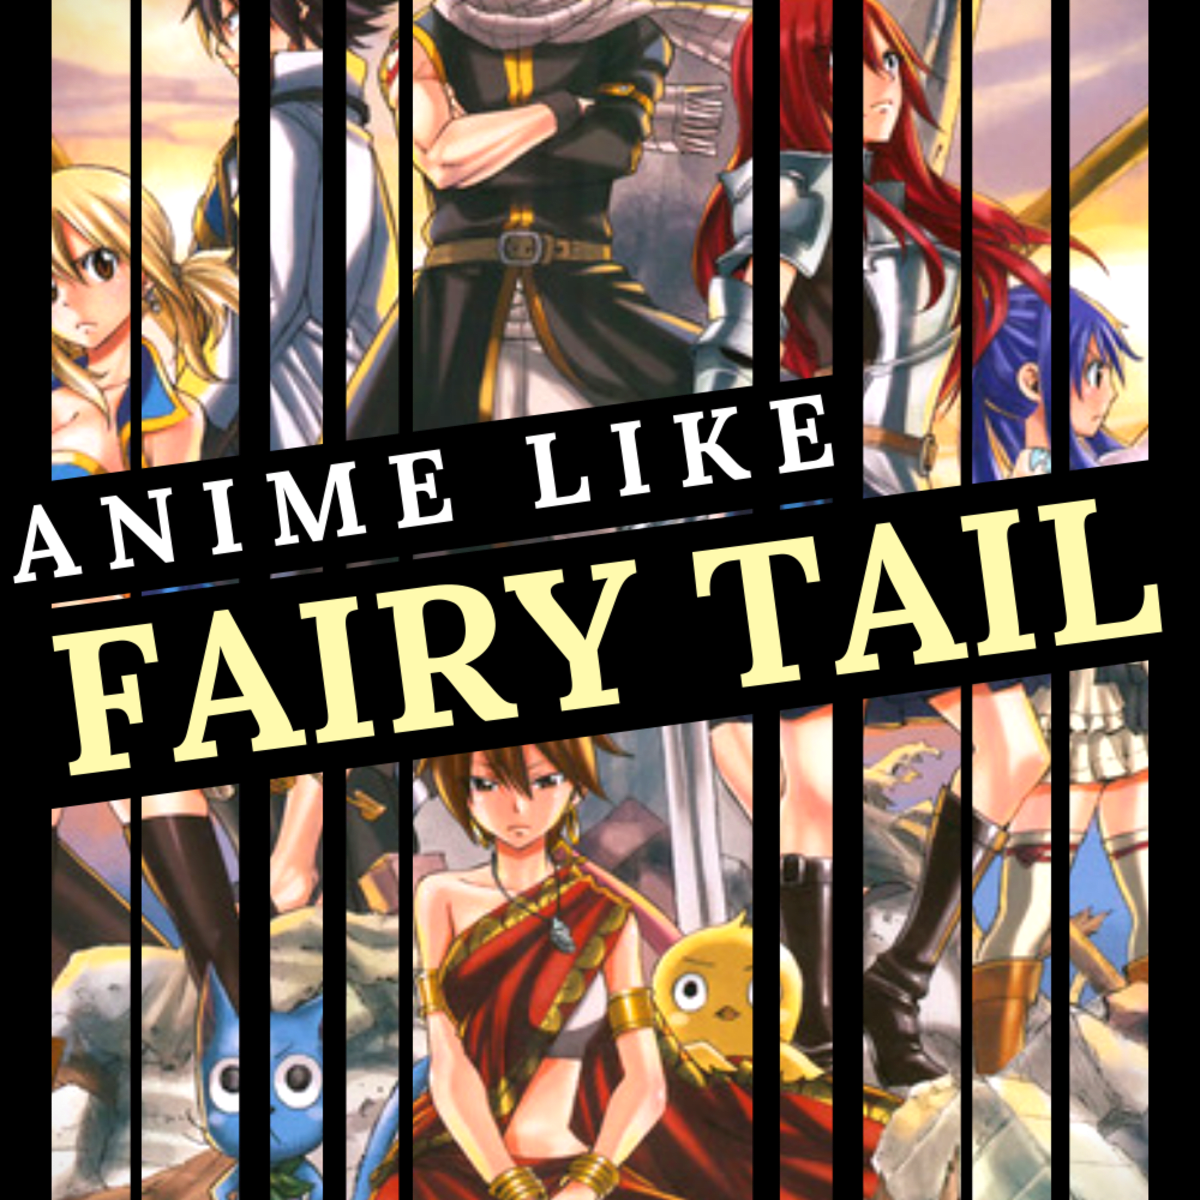 10 Anime Like Fairy Tail Reelrundown Entertainment